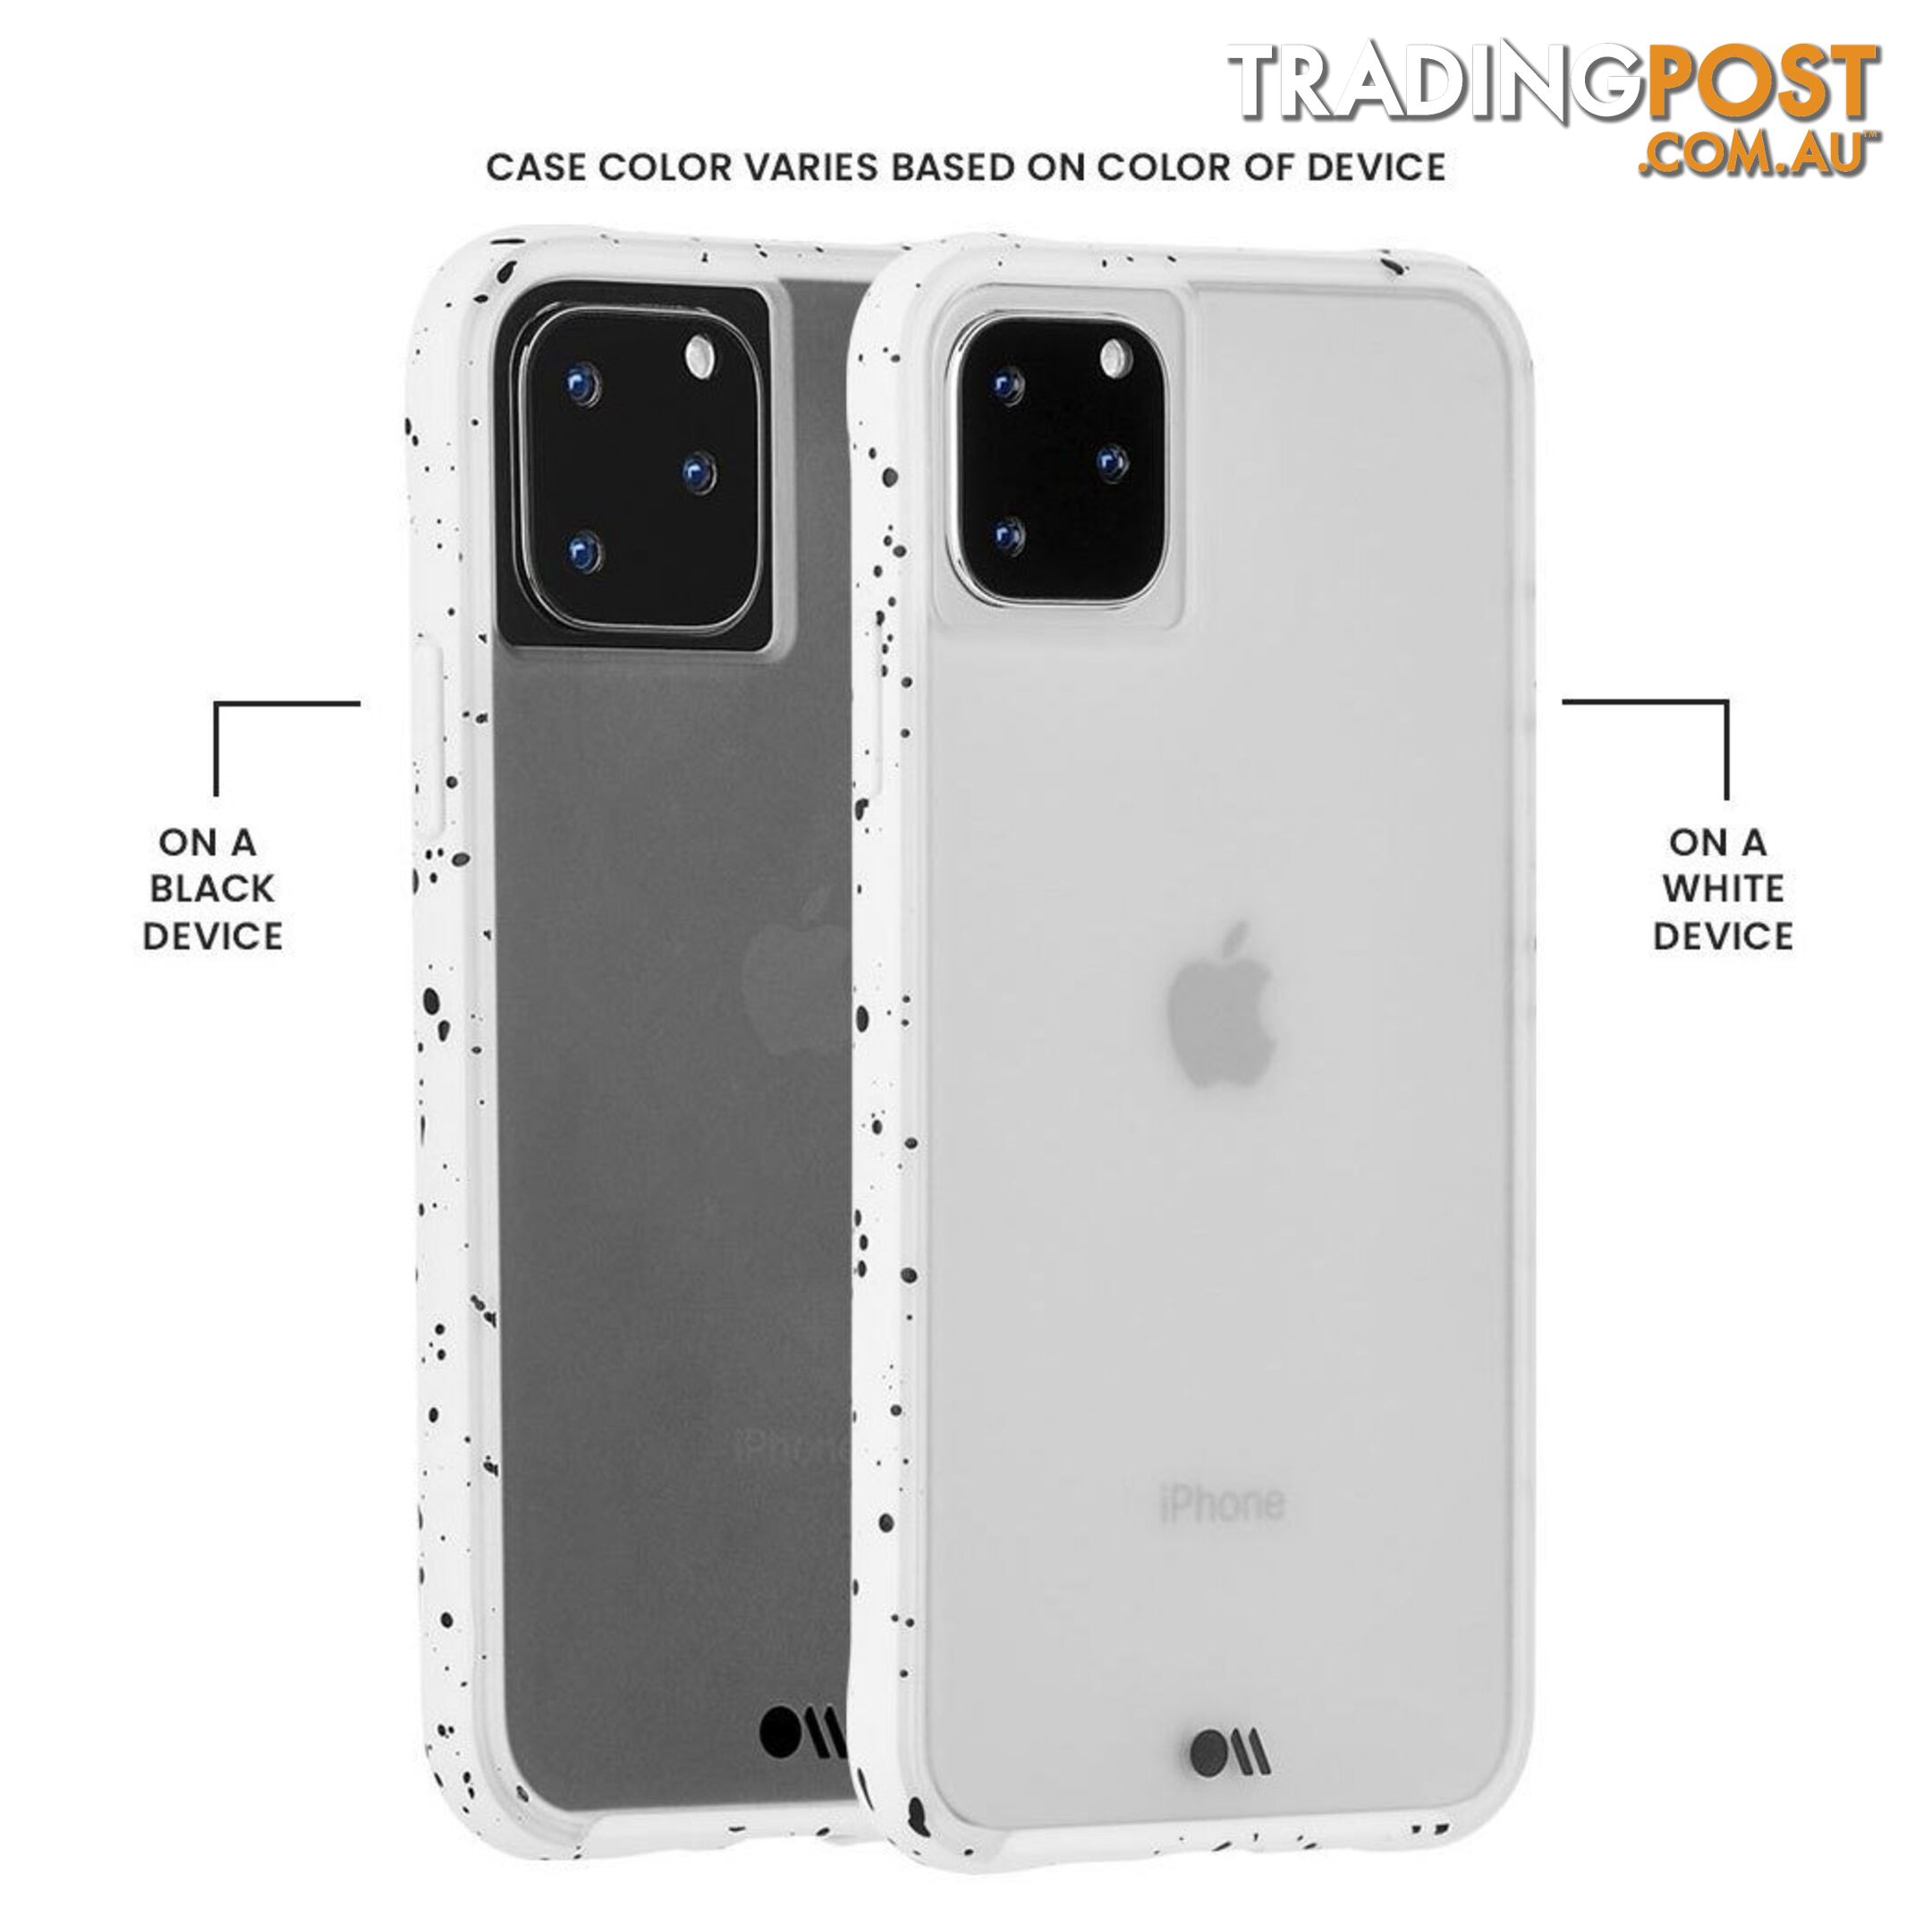 Case-Mate Tough Speckled Case For iPhone 11 Pro - Case-Mate - Acitive Black - 846127185622